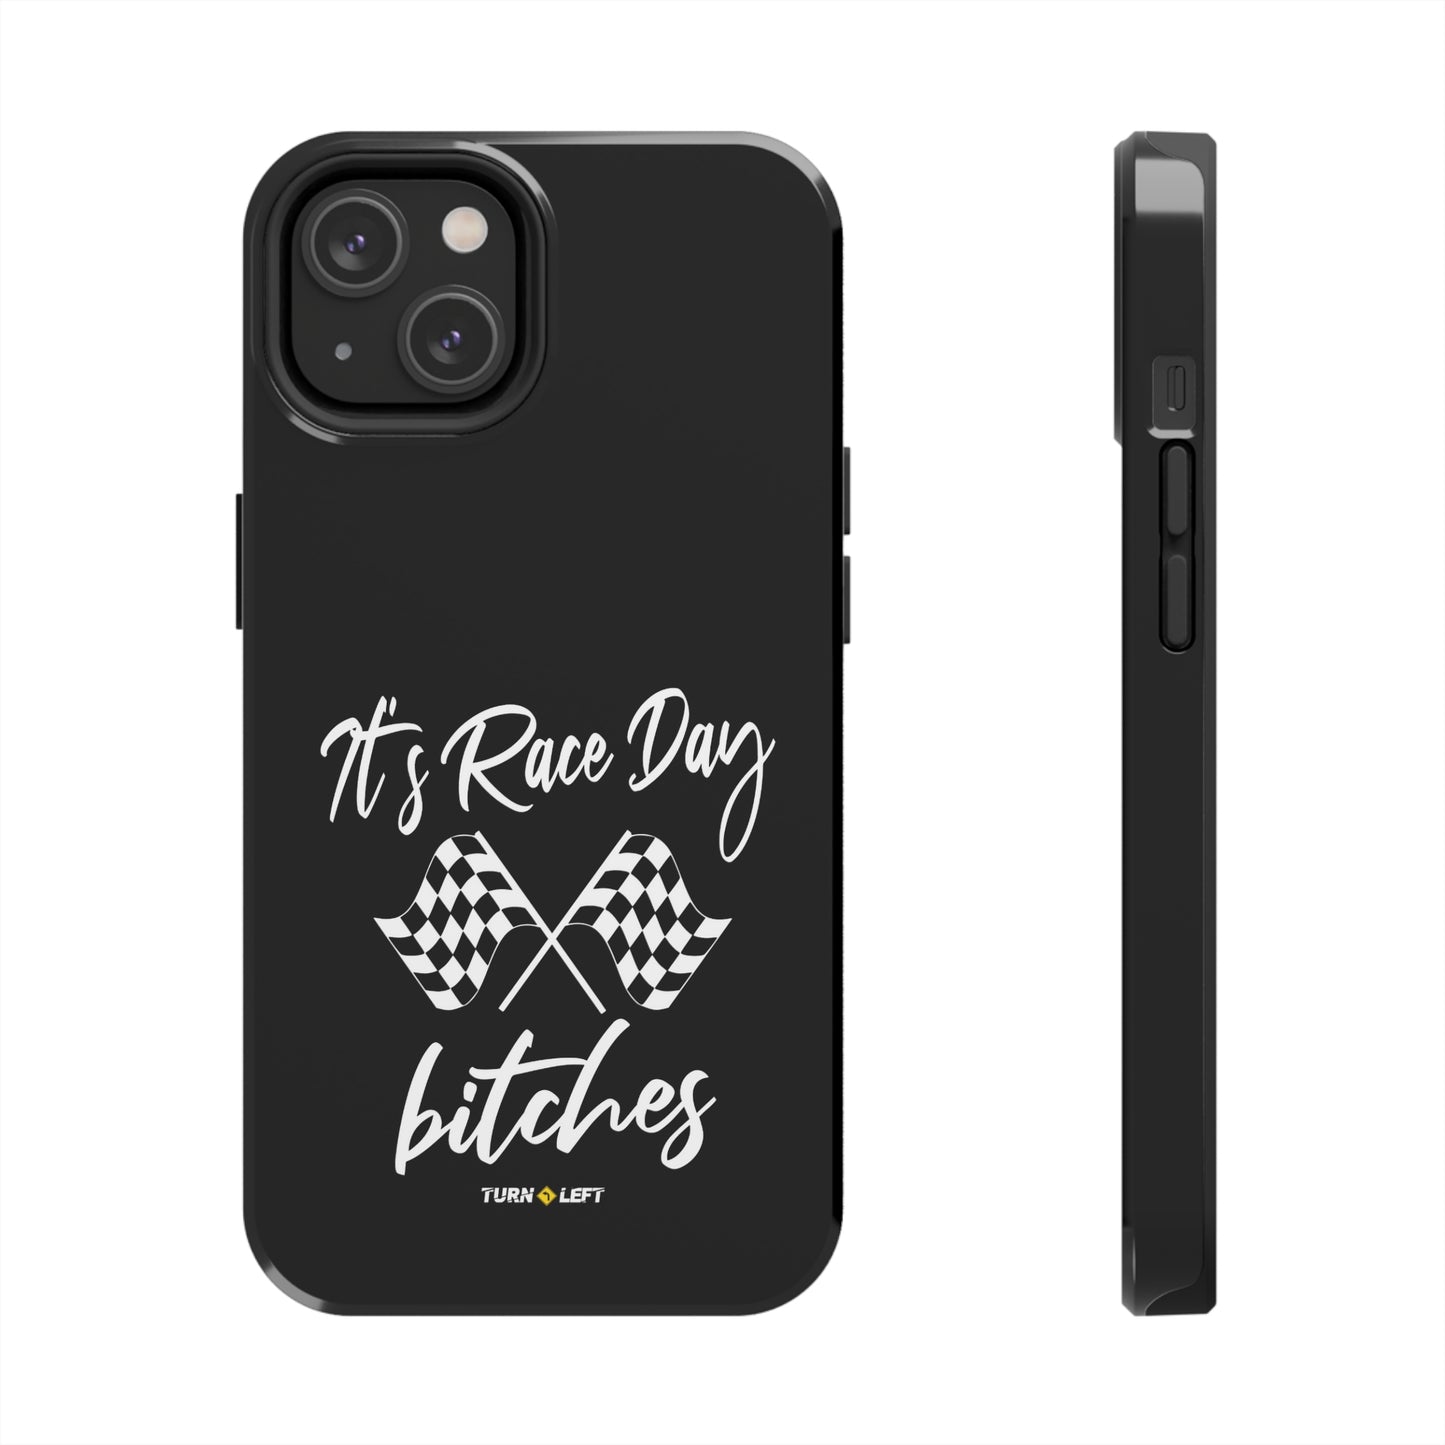 It's Raceday Bitches Tough Phone Cases